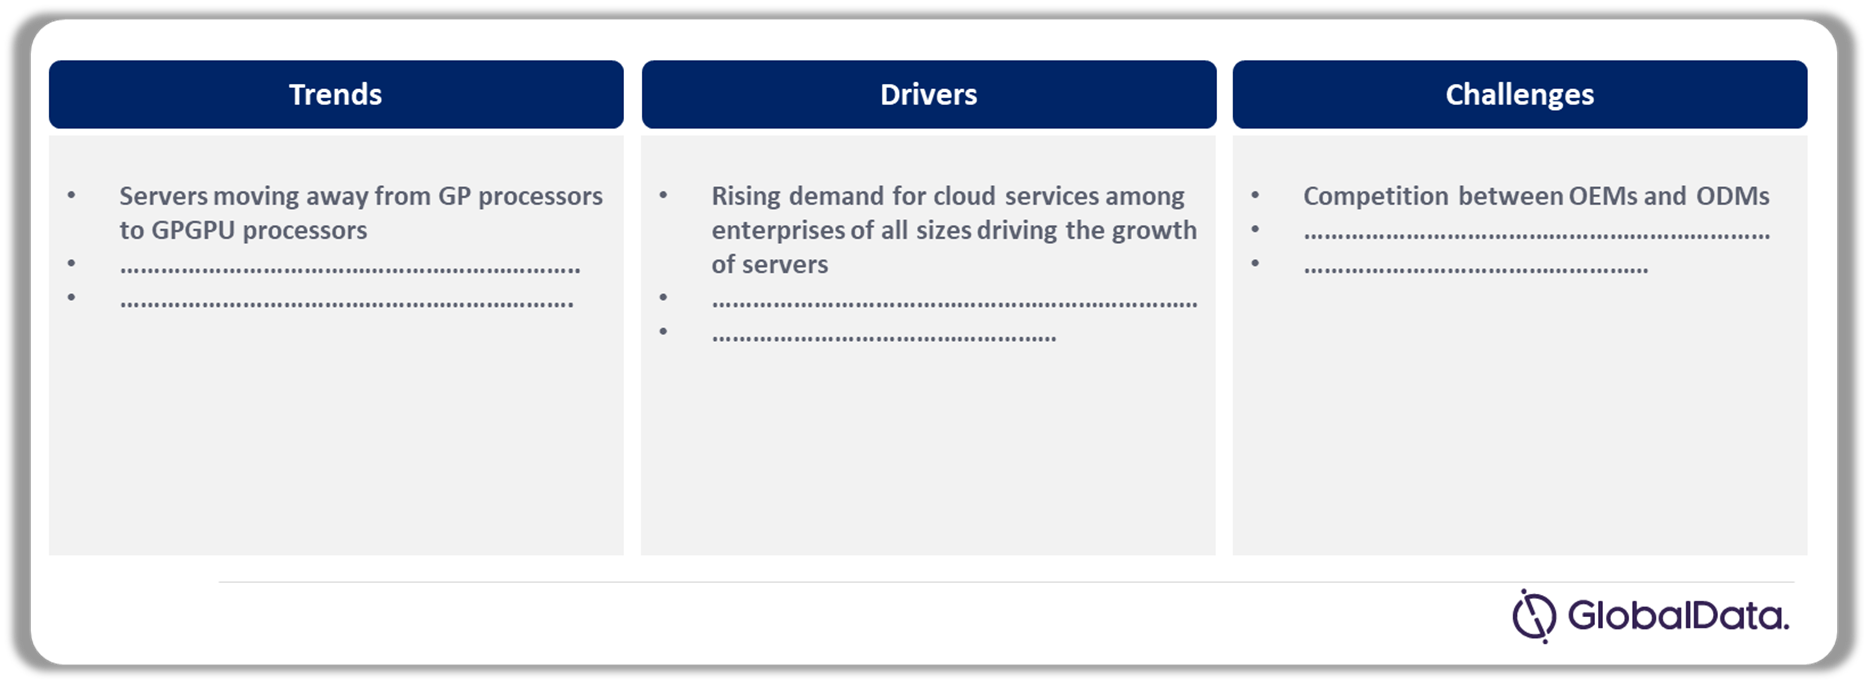 Enterprise Servers Market - Drivers, Trends and Challenges